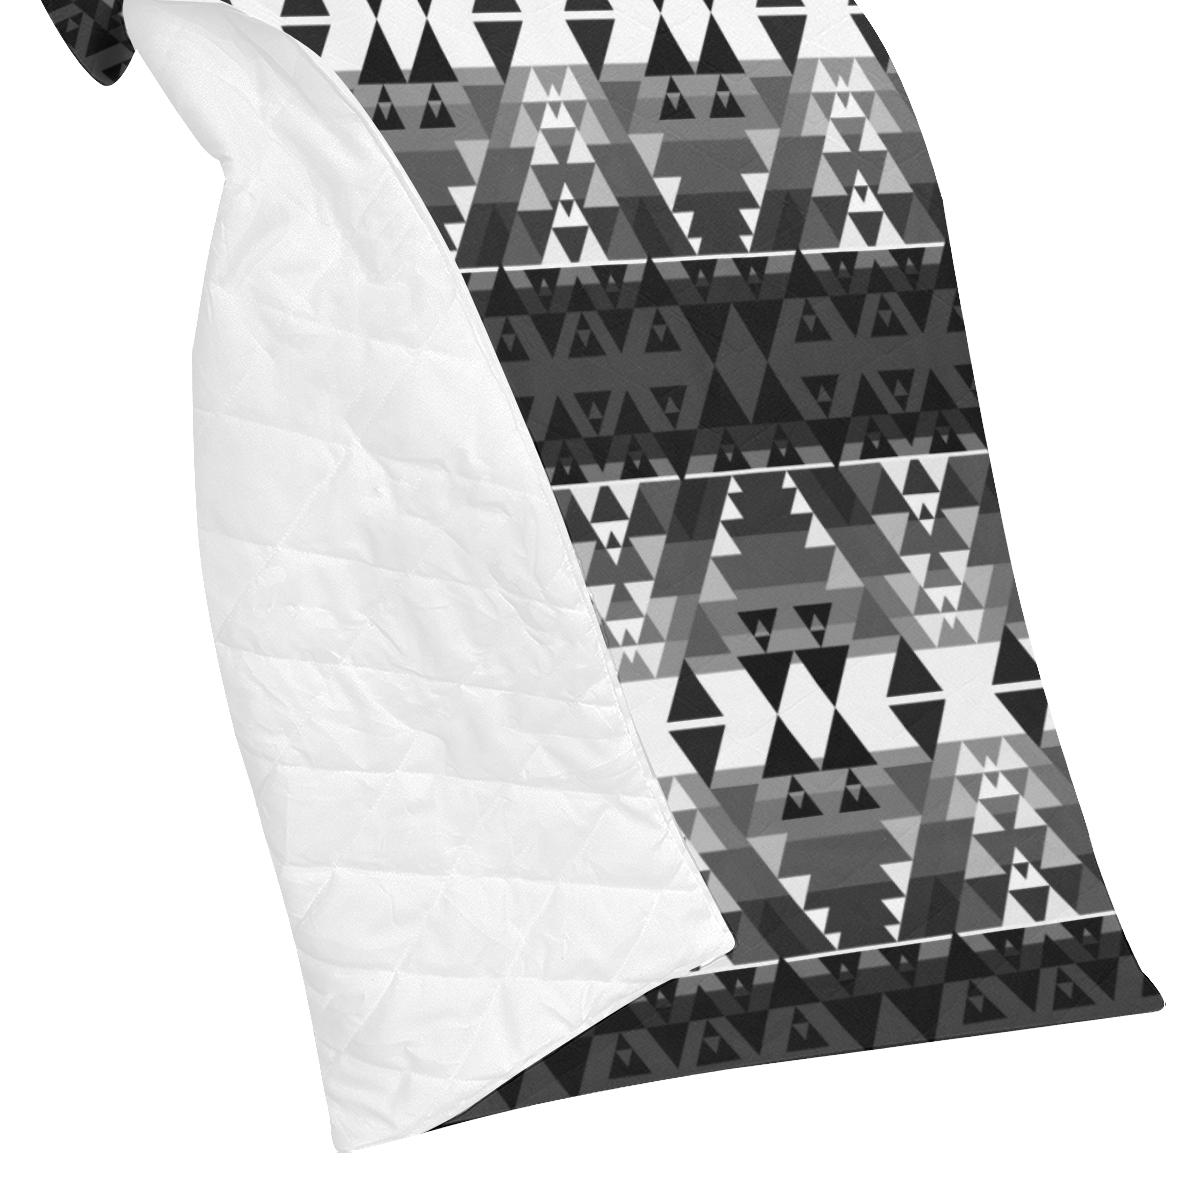 Writing on Stone Black and White Quilt 70"x80" blanket e-joyer 